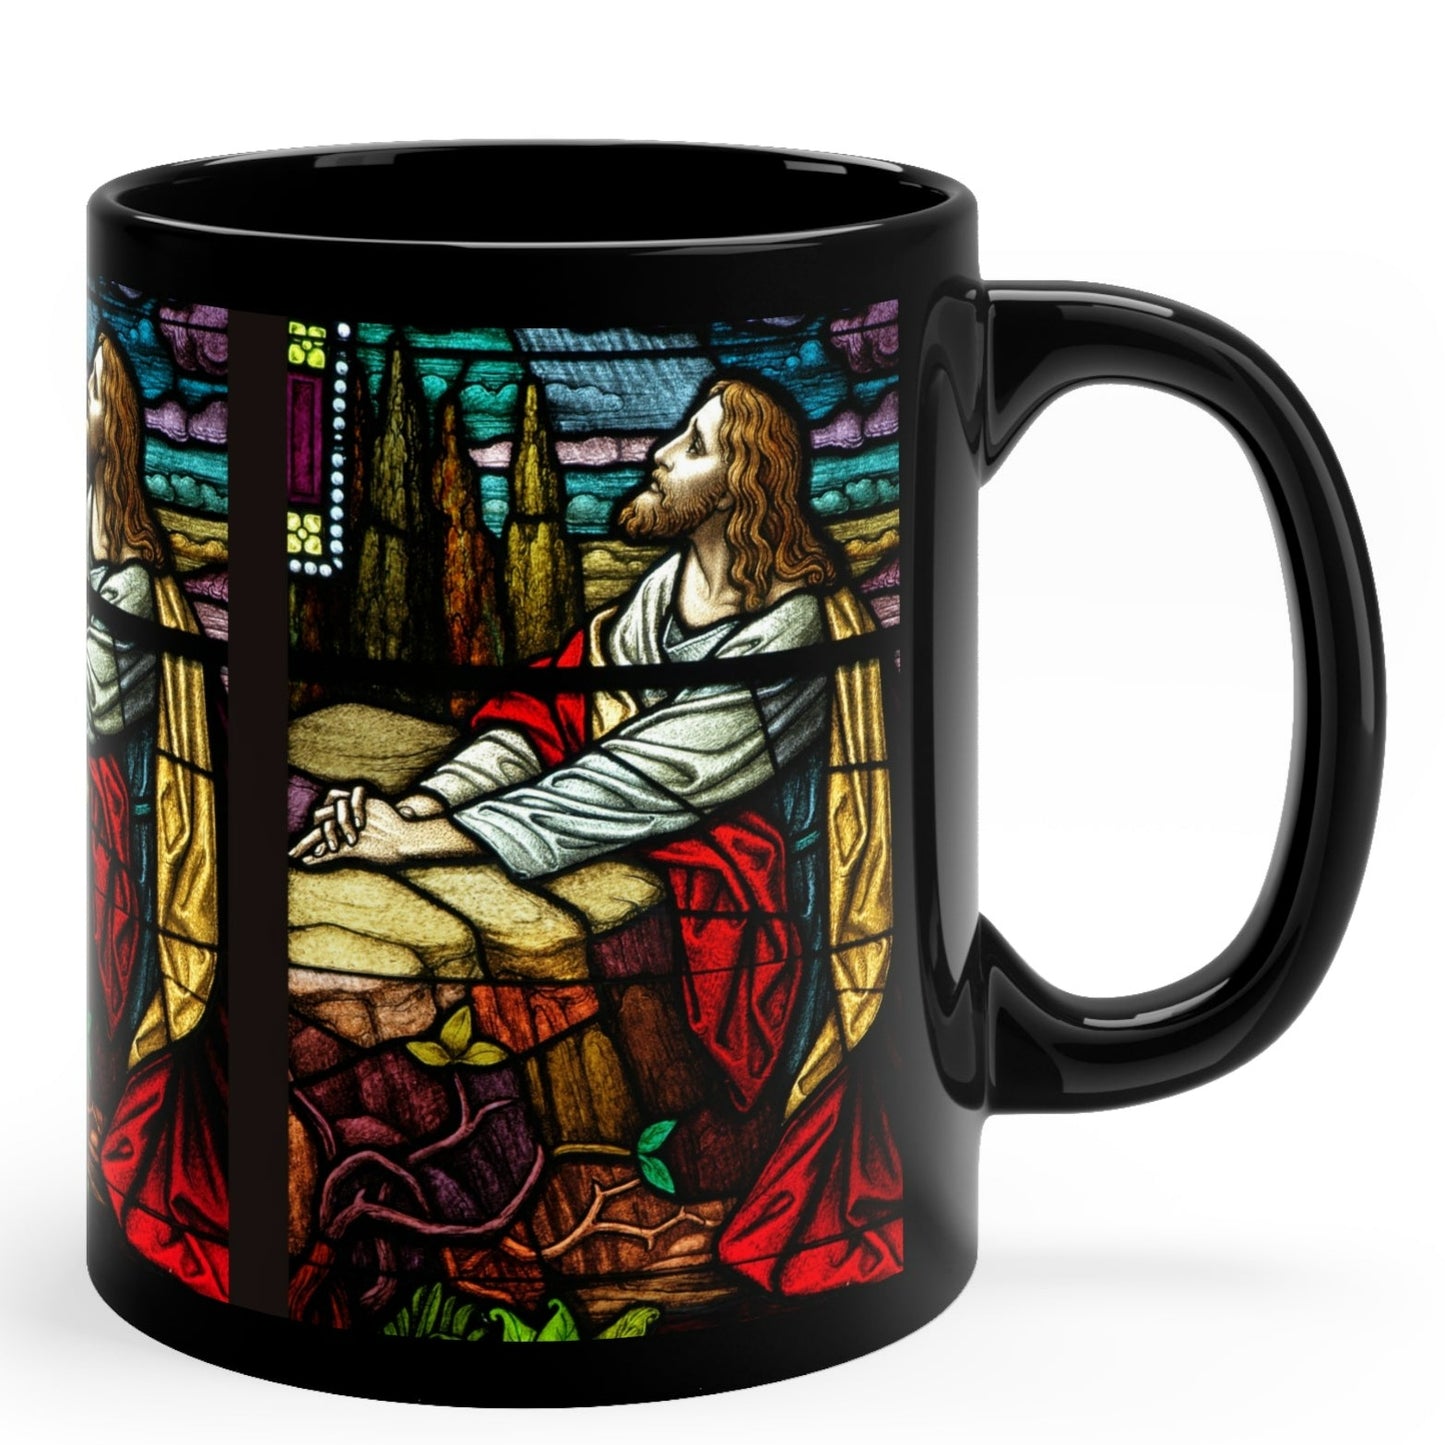 JESUS PRAY in the GARDEN of GETHSEMANE Mug - MUGSCITY SPECIAL EDITION - Free Shipping